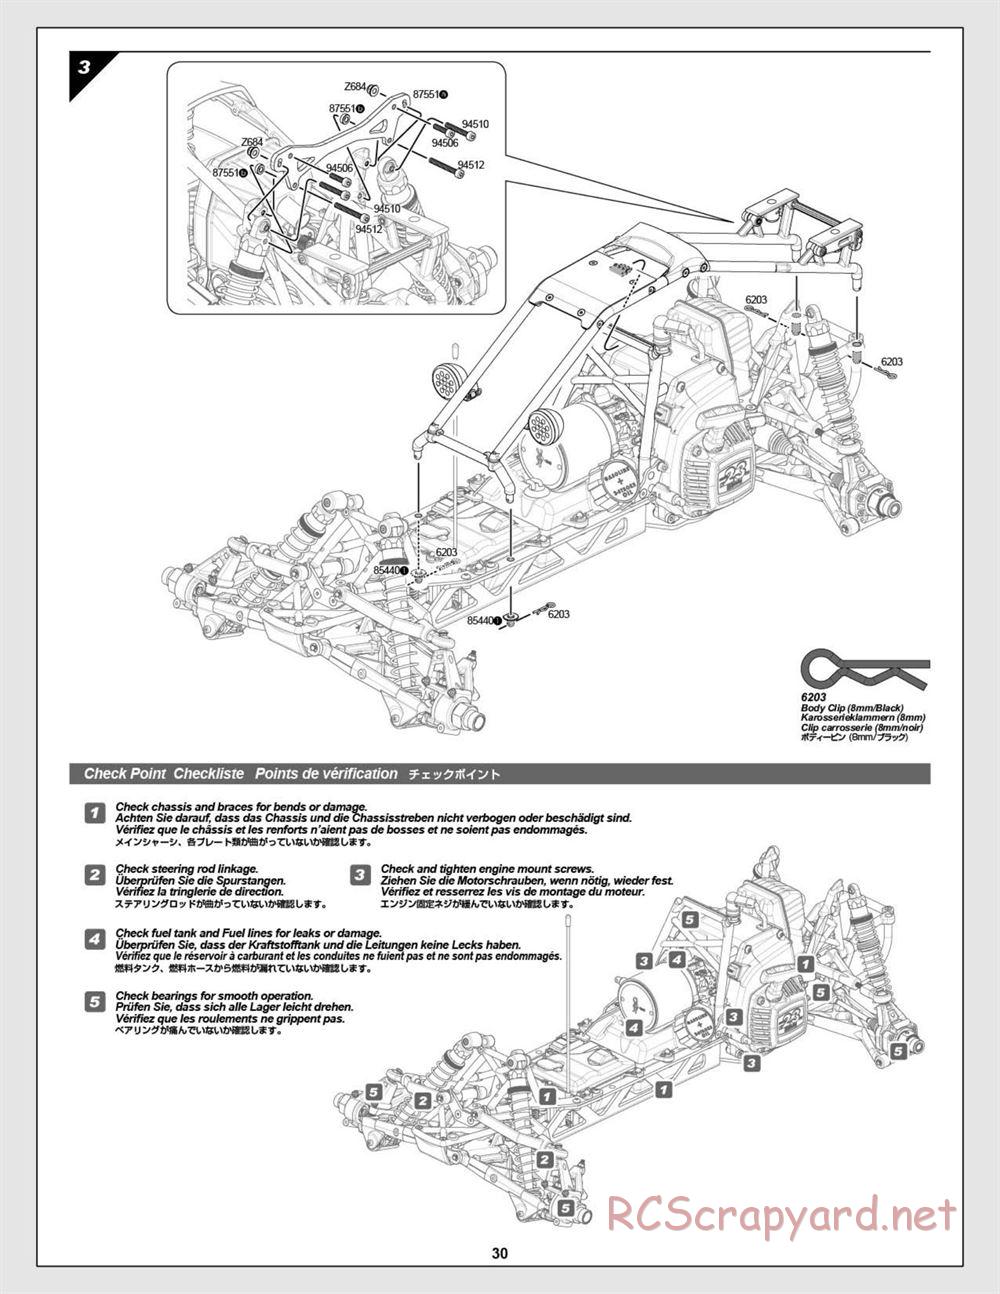 HPI - Baja 5B 2.0 RTR - Manual - Page 30